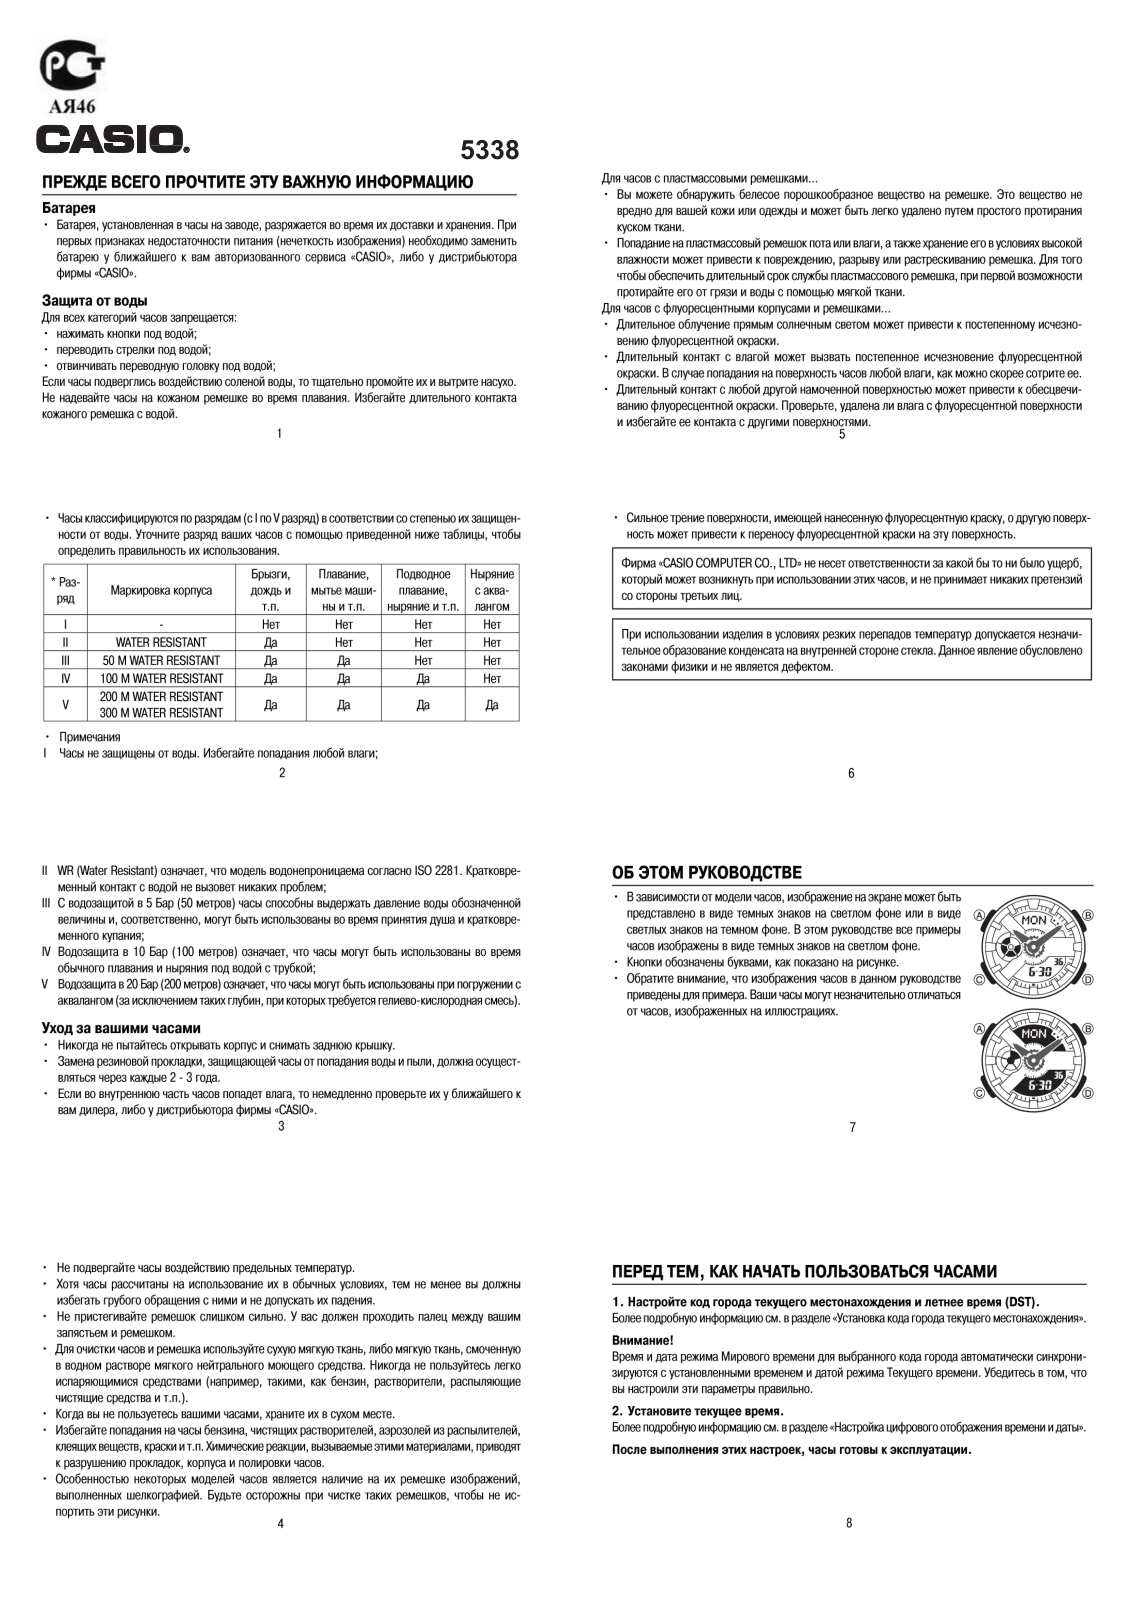 Casio BA-110SN-1A User Manual